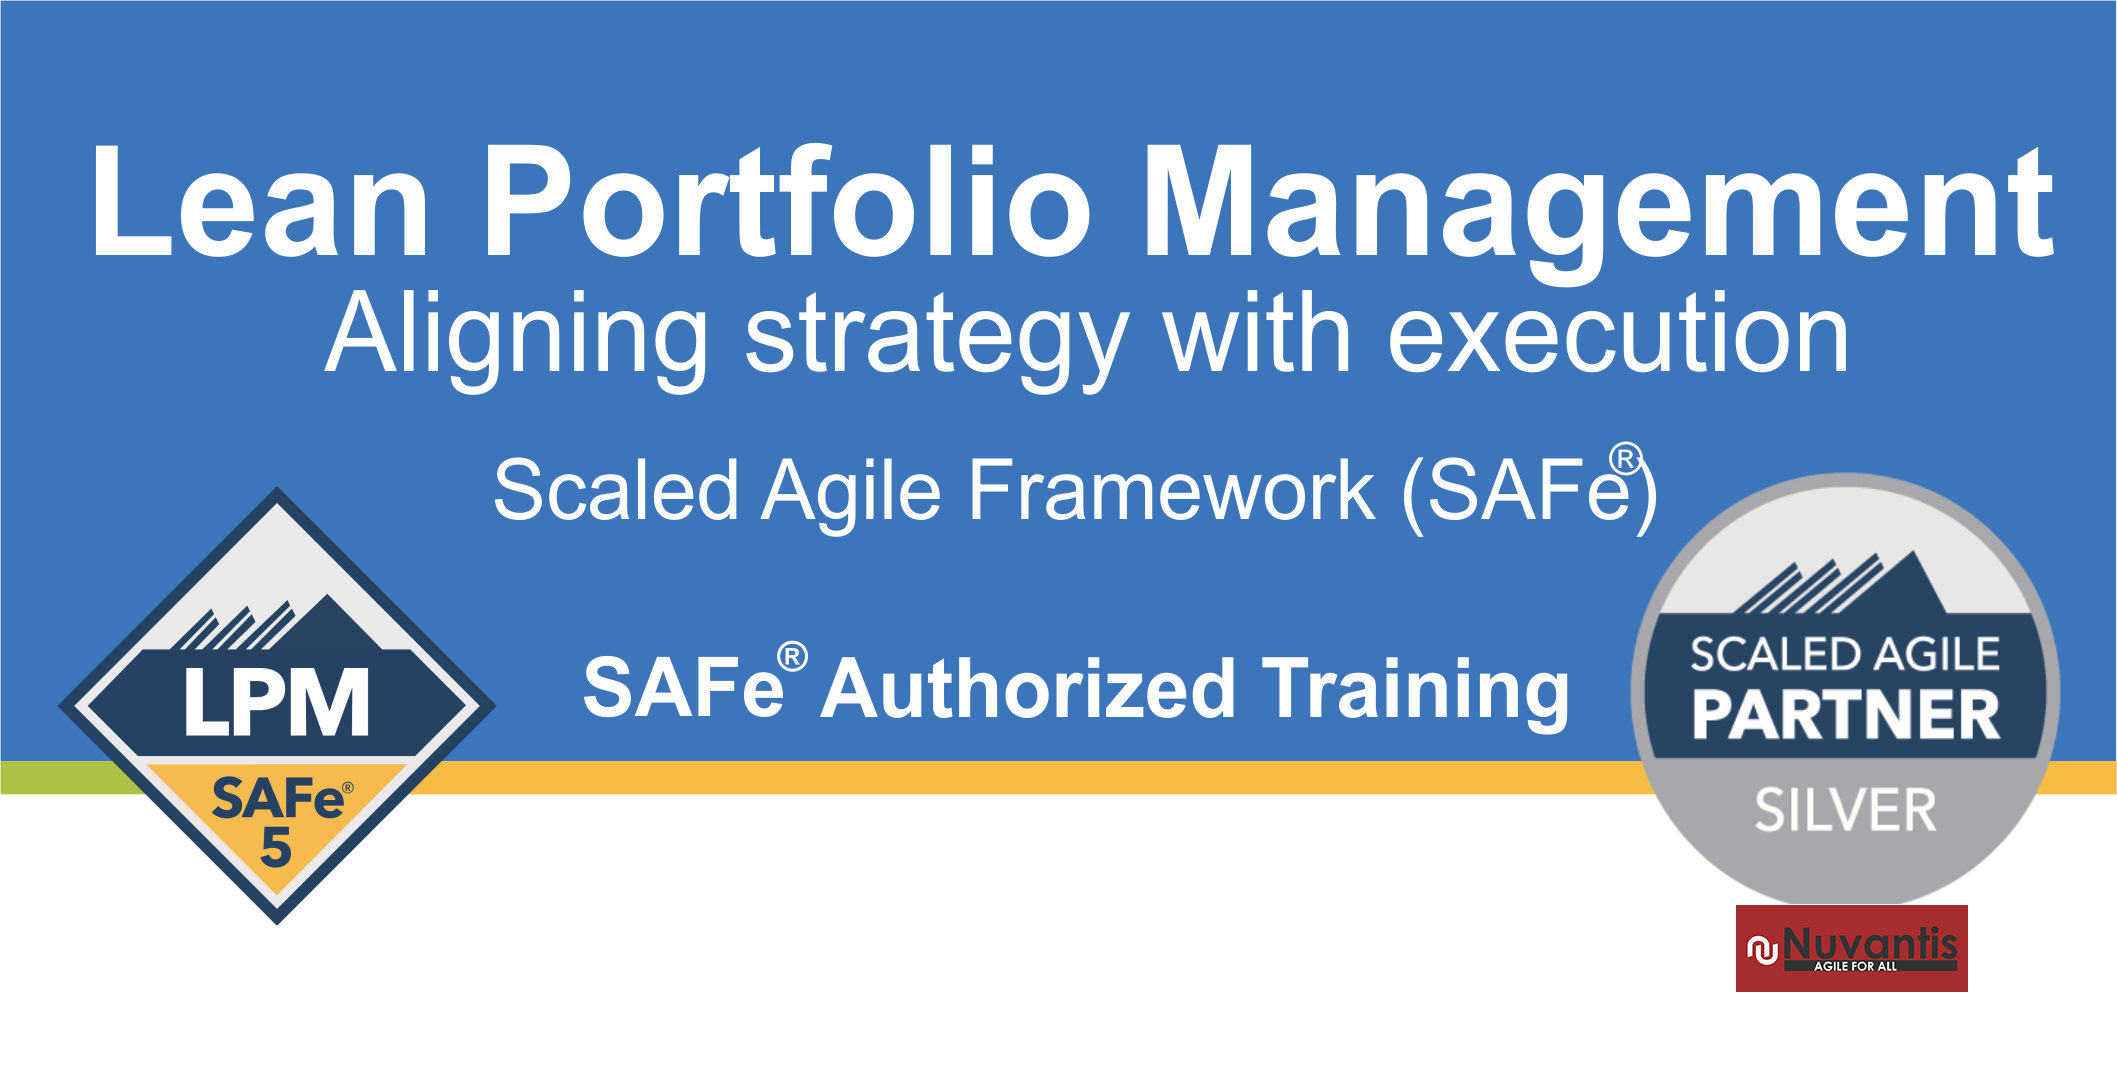 NEW - SAFe® Lean Portfolio Management 5.0 (Edison, NJ) - Confirmed to Run